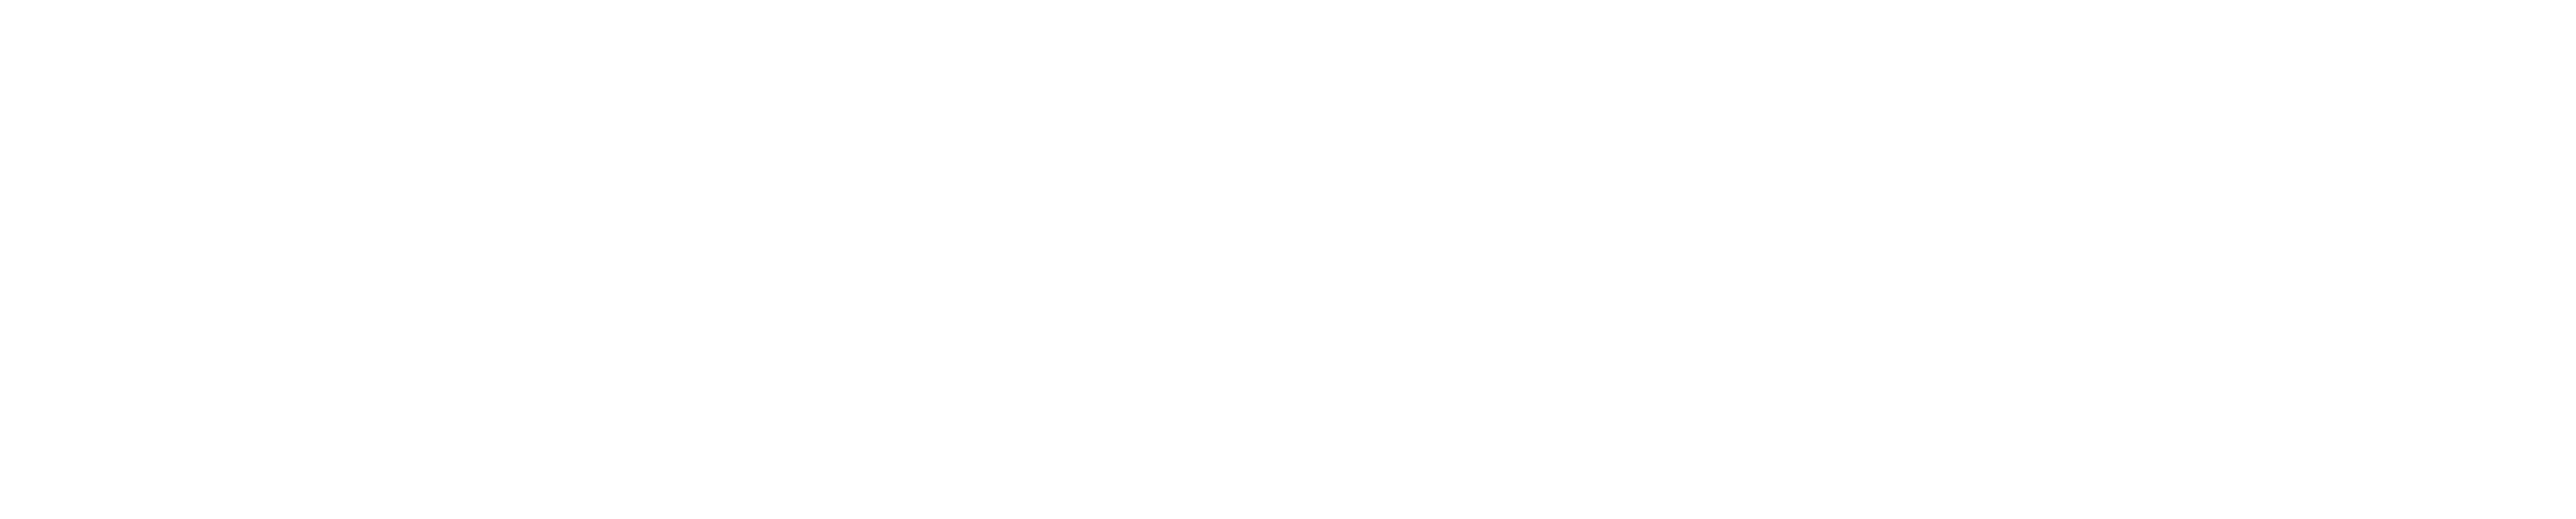 Demandbase_Logo